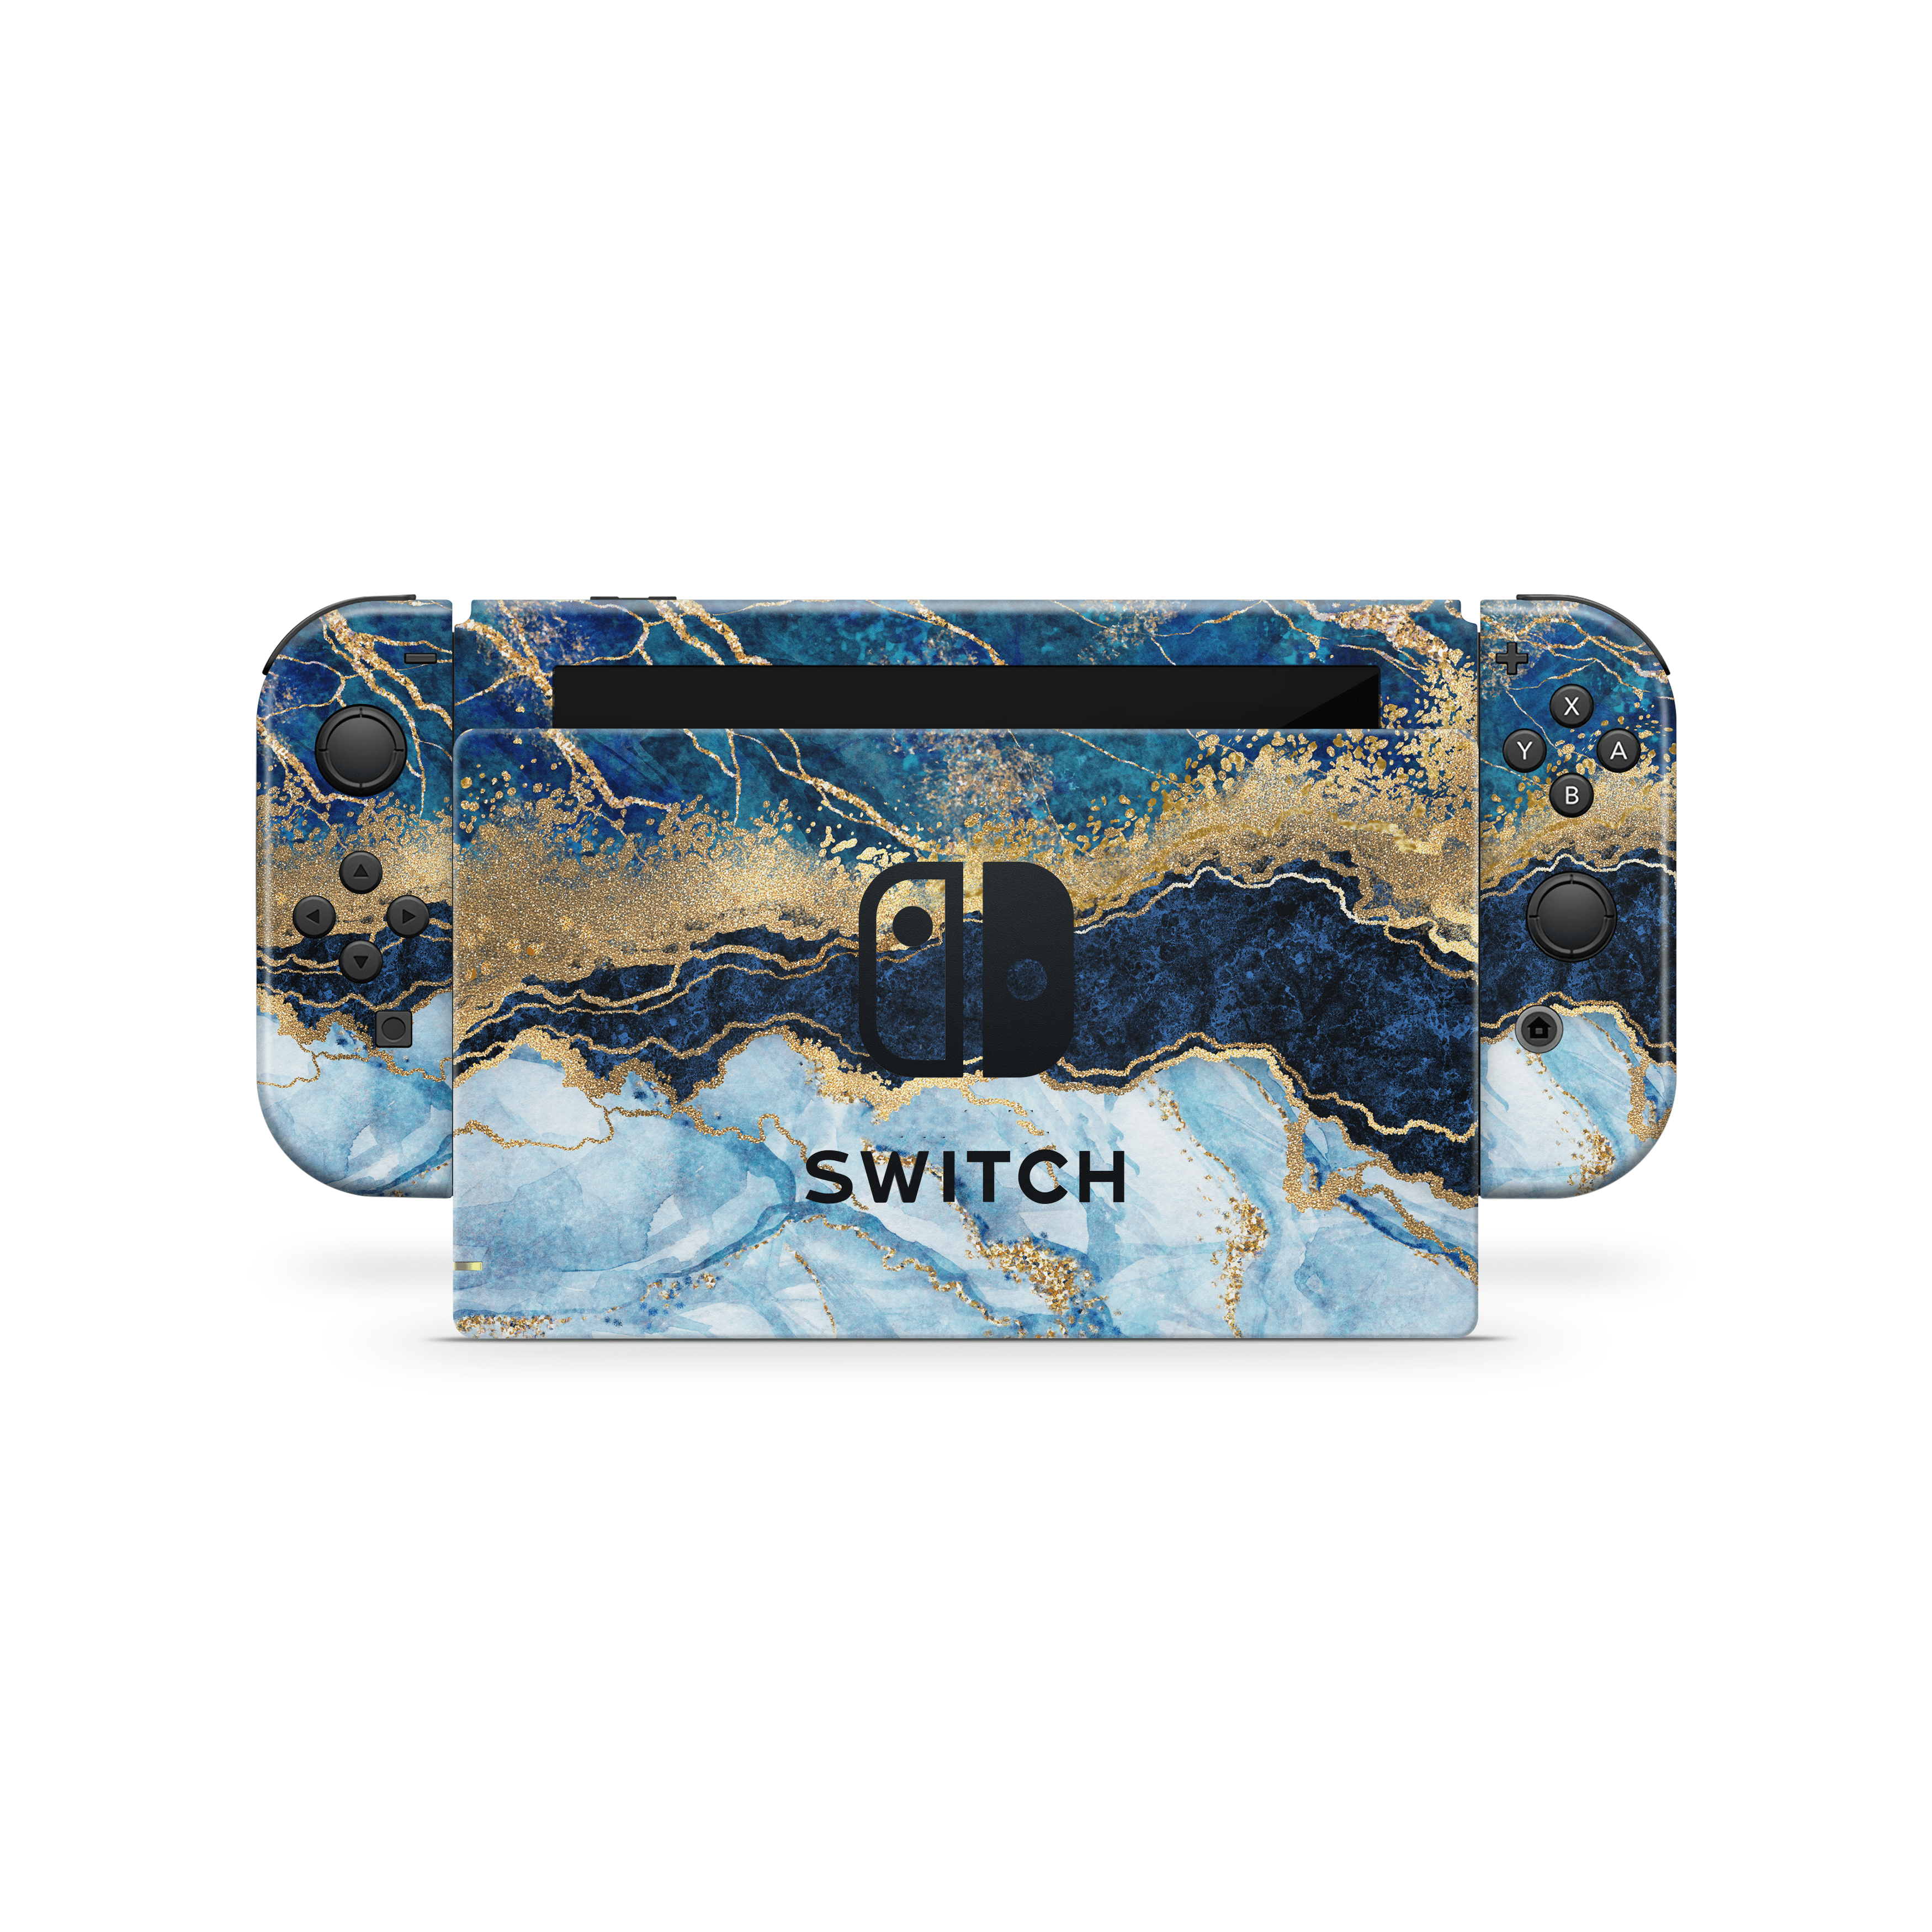 Royal Beach Nintendo Switch Skin